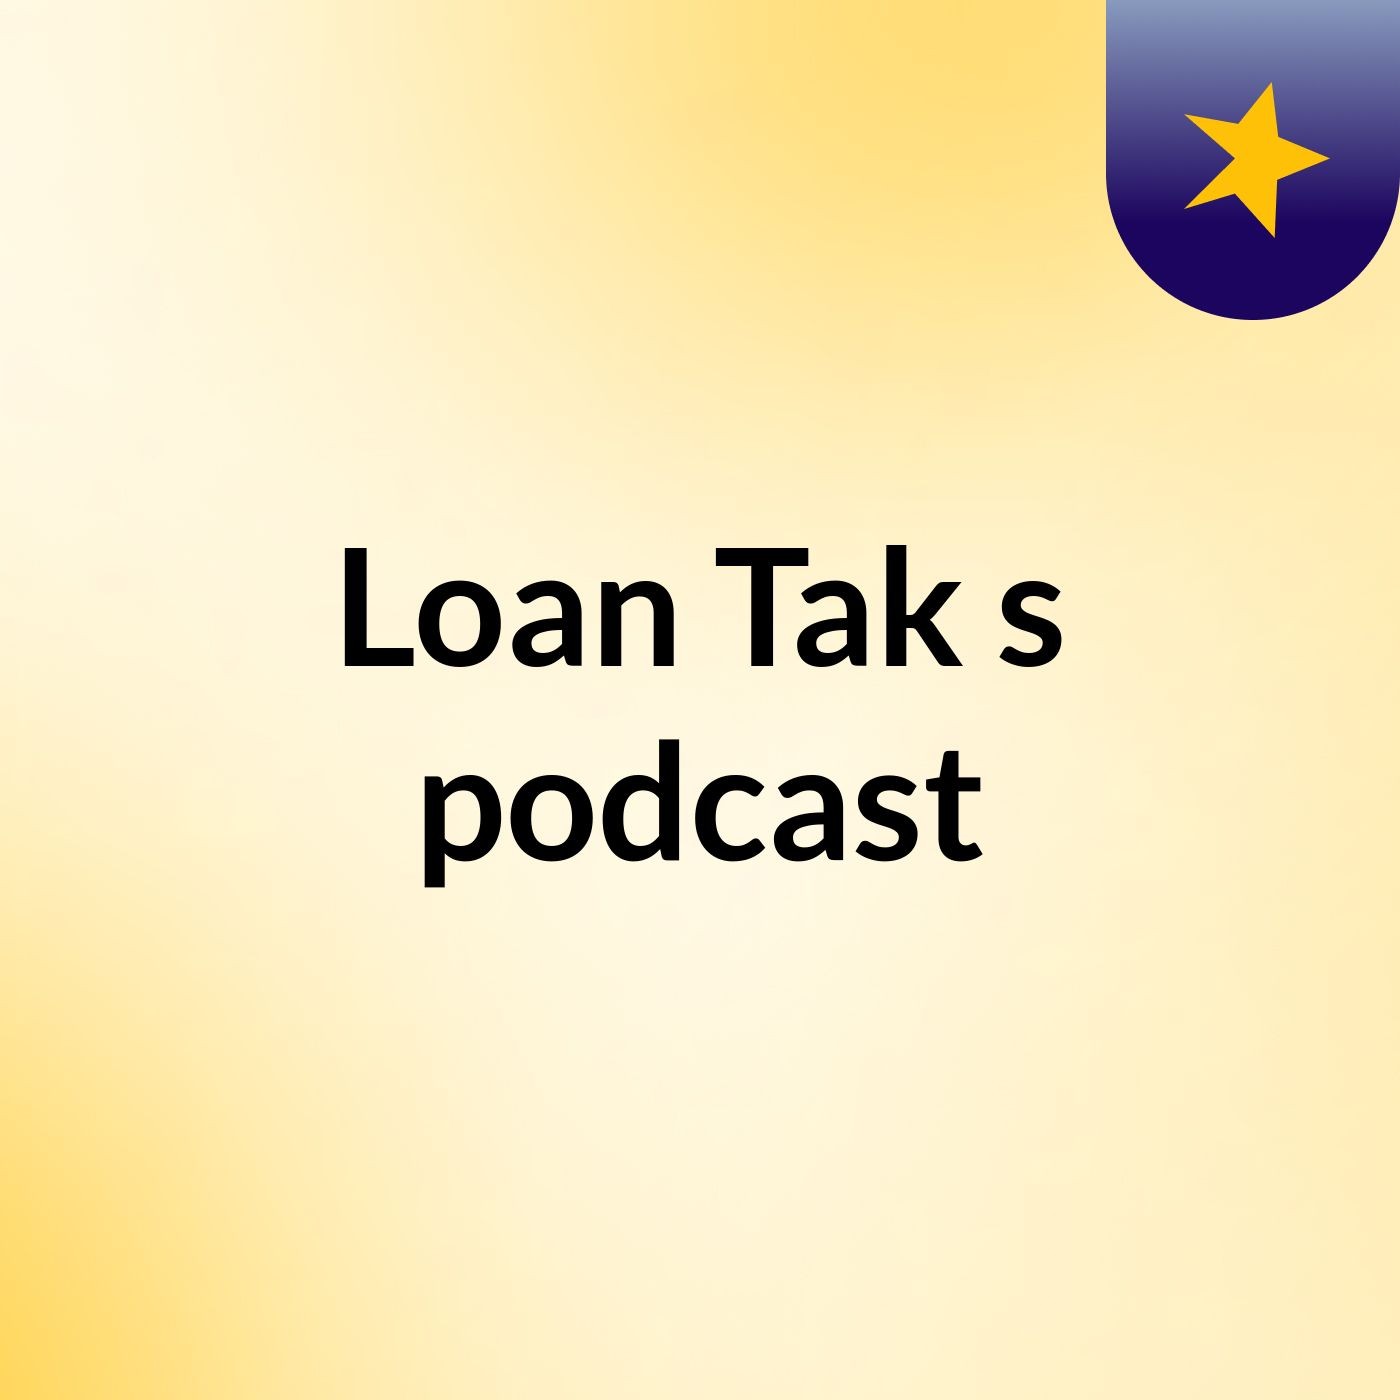 Loan Tak's podcast